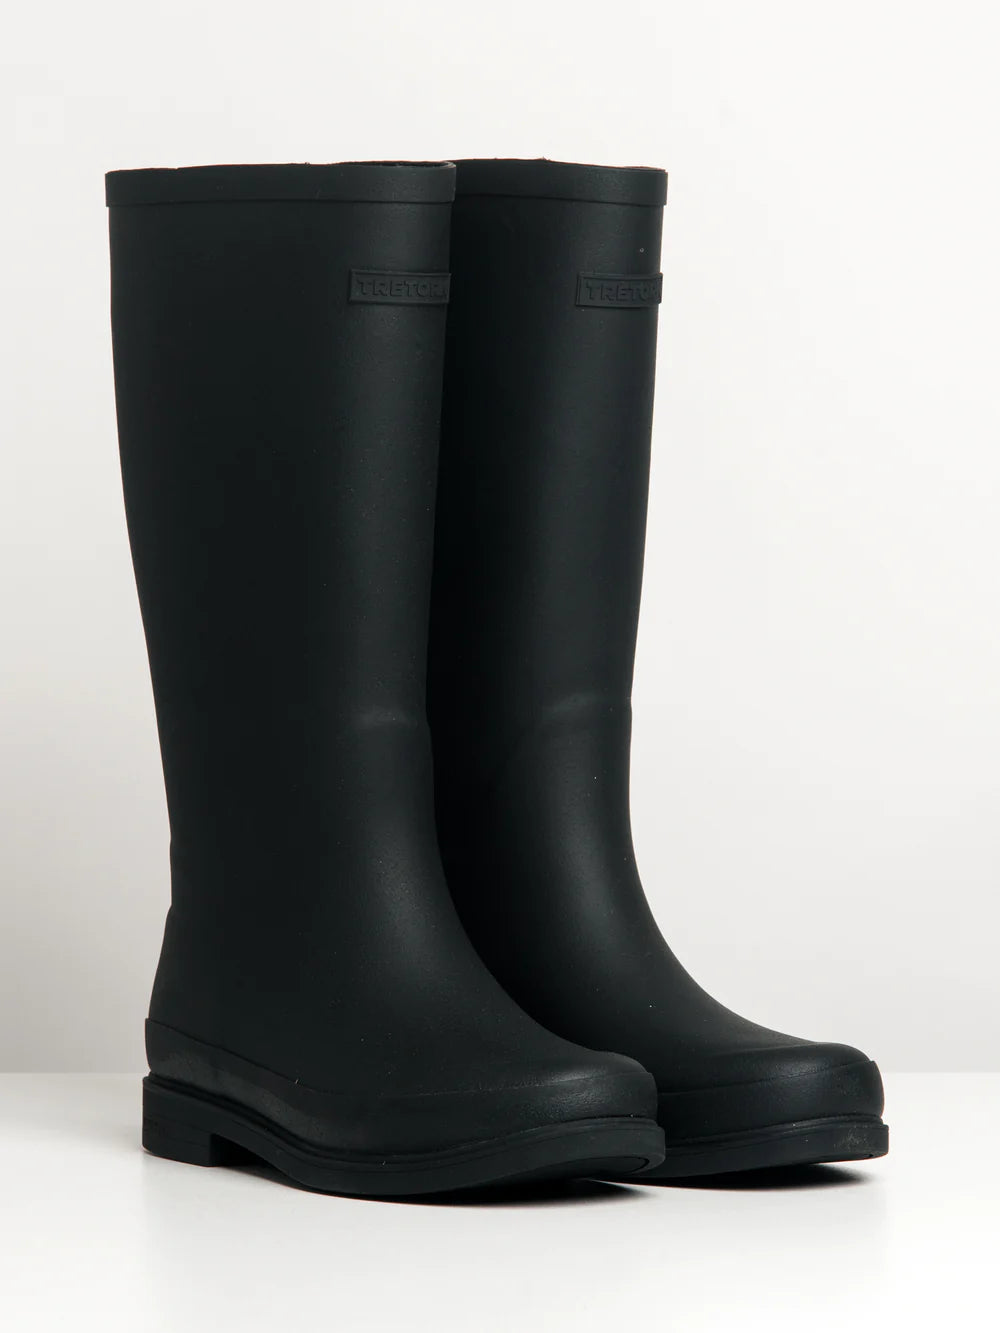 shoes - TRETORN - Eva High H2O Proof Rubber Boot - PLENTY